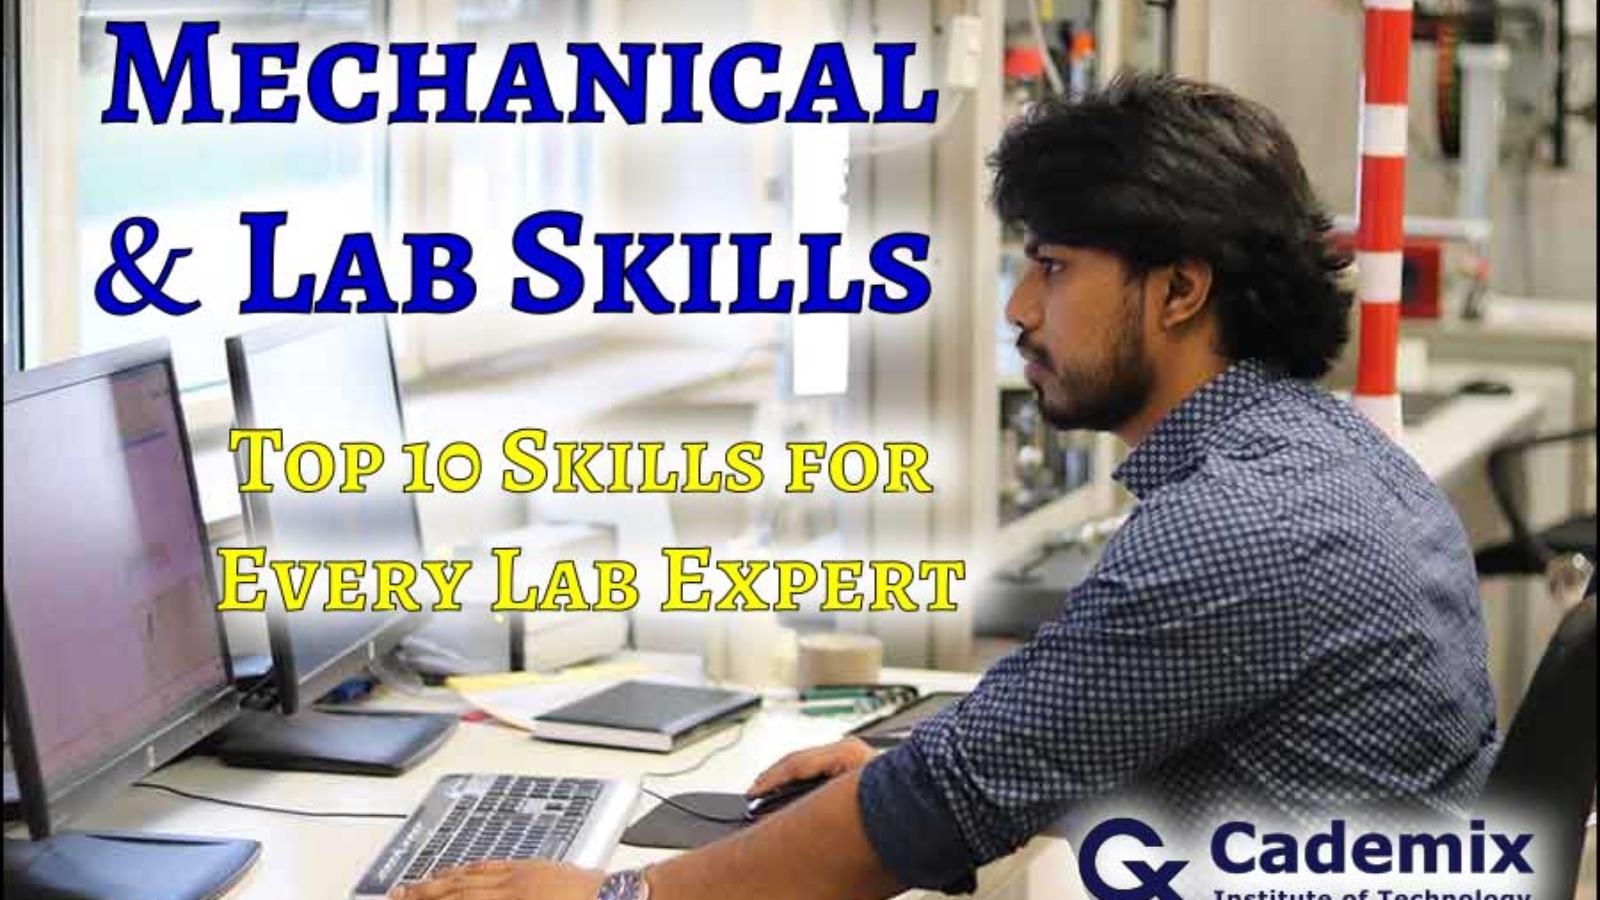 Shashank Kadagala Mechanical and Lab Skills article Cademix